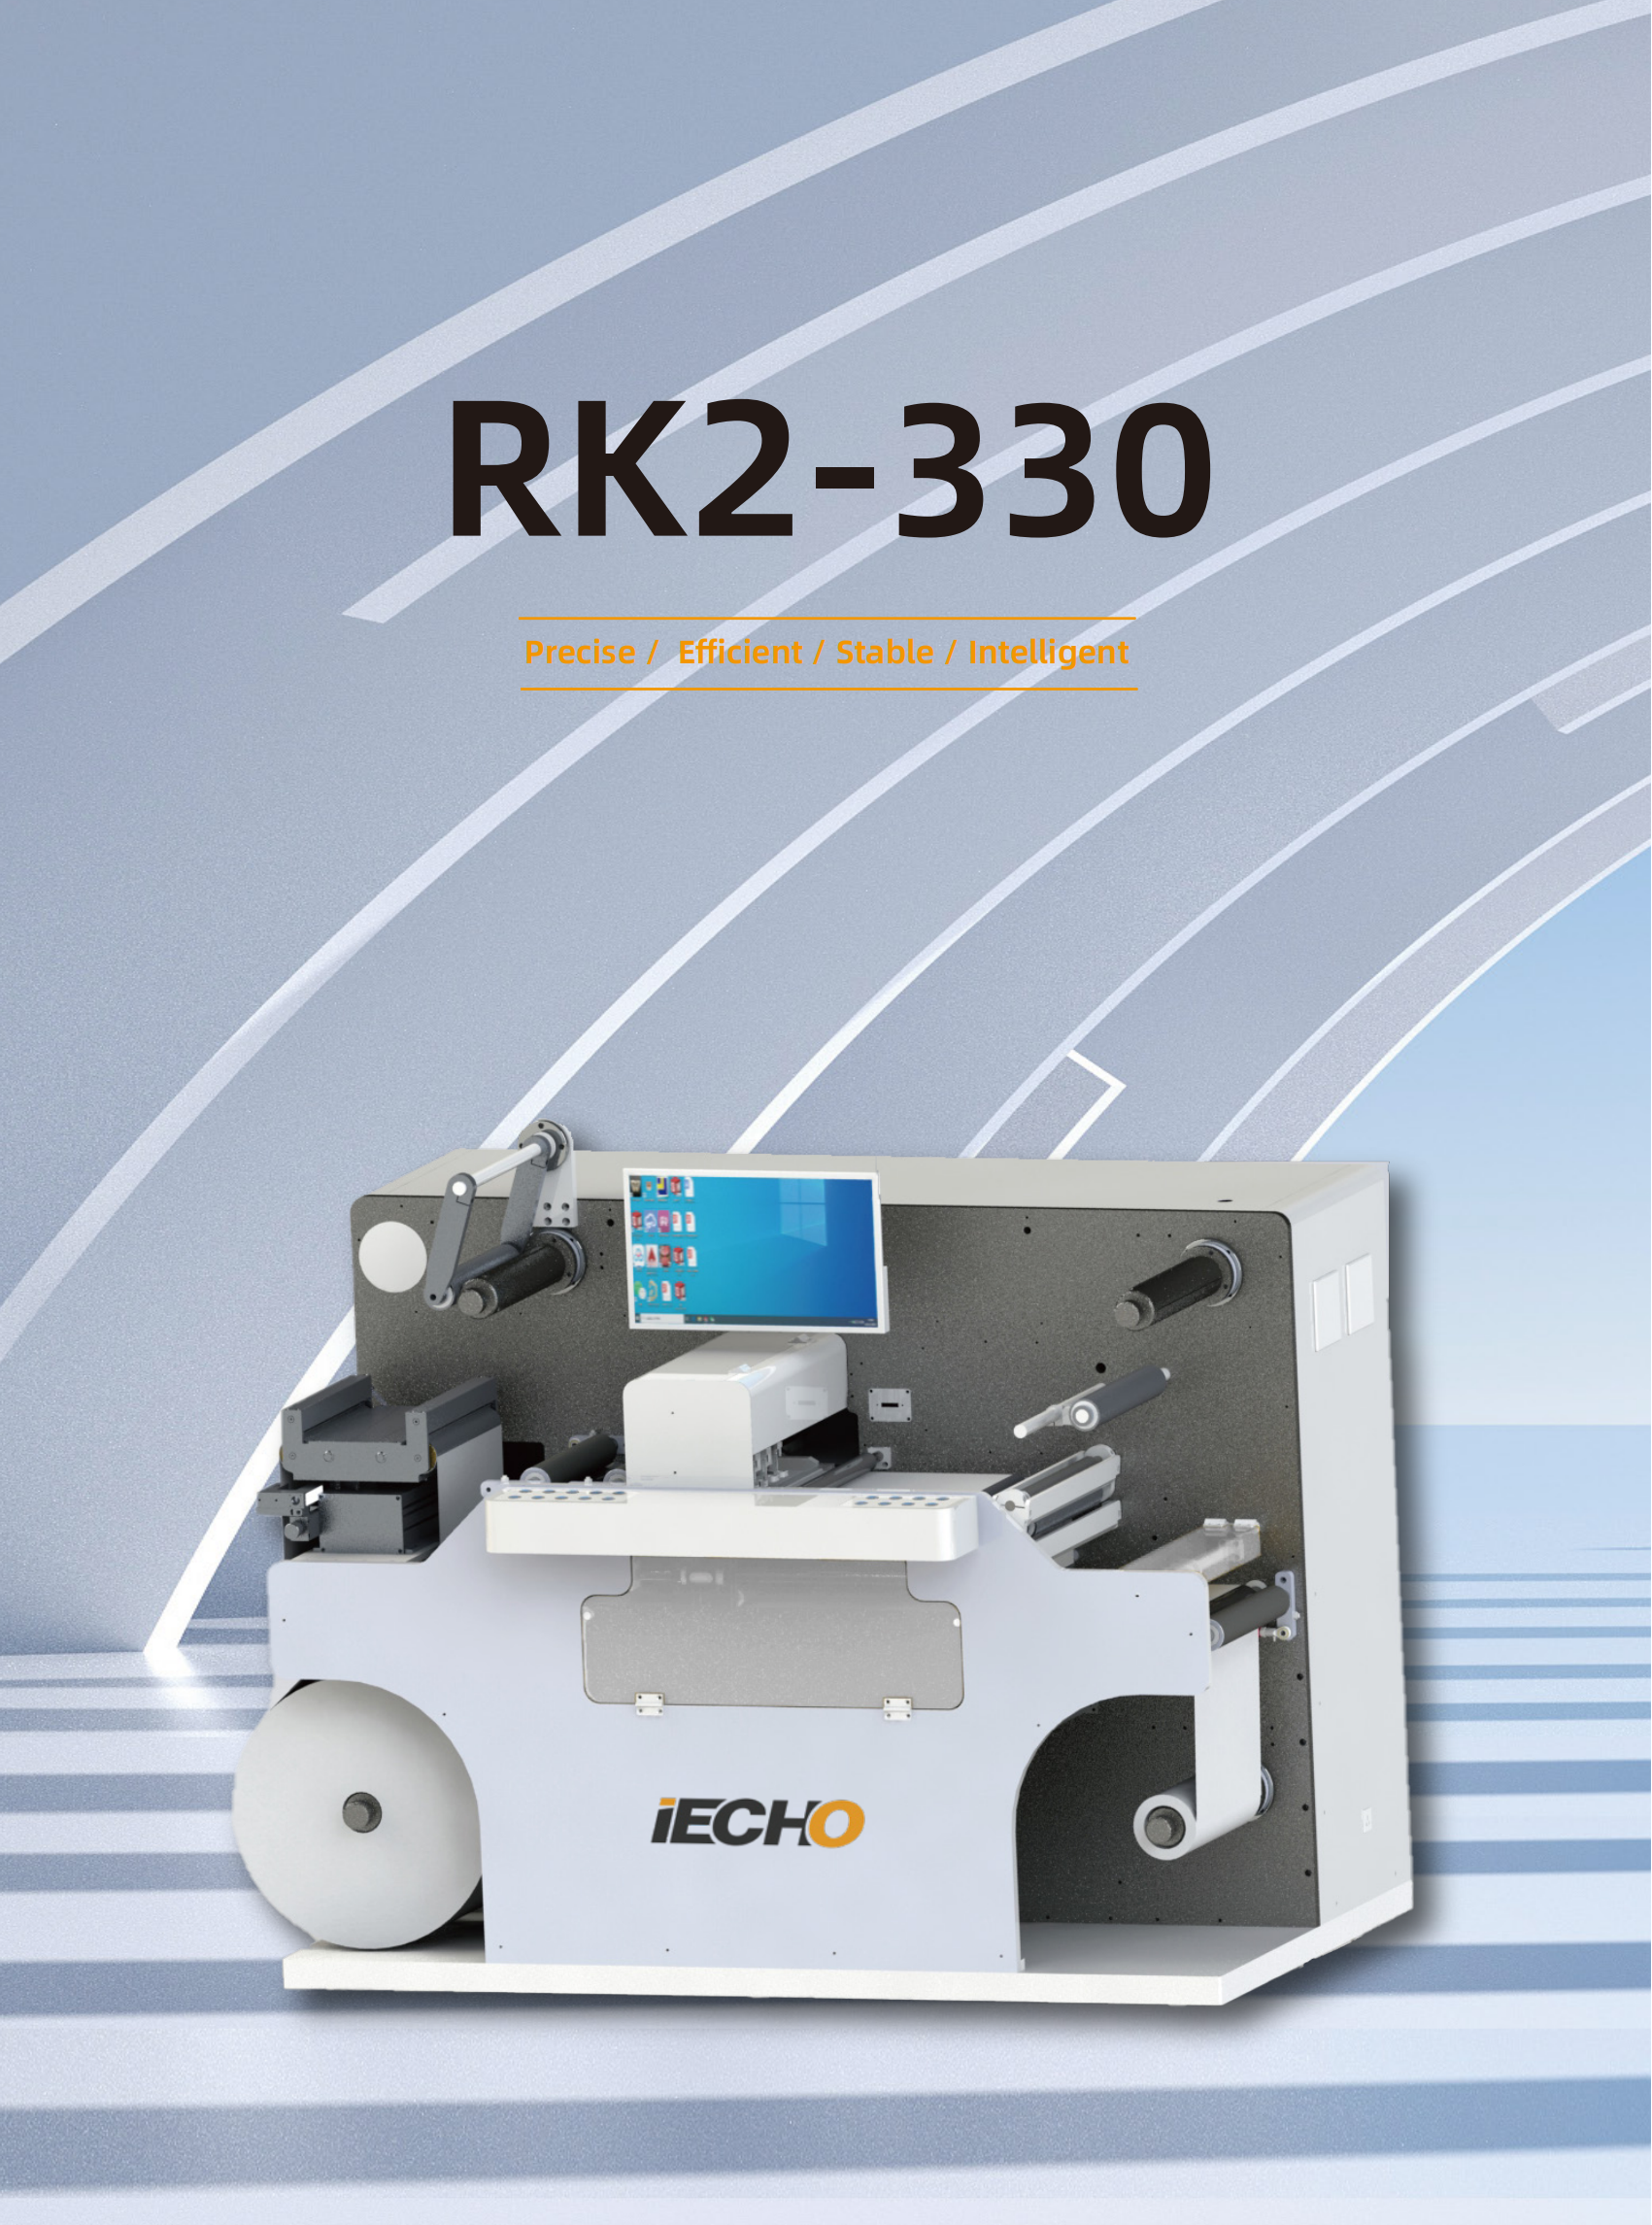 RK2 Product Brochure